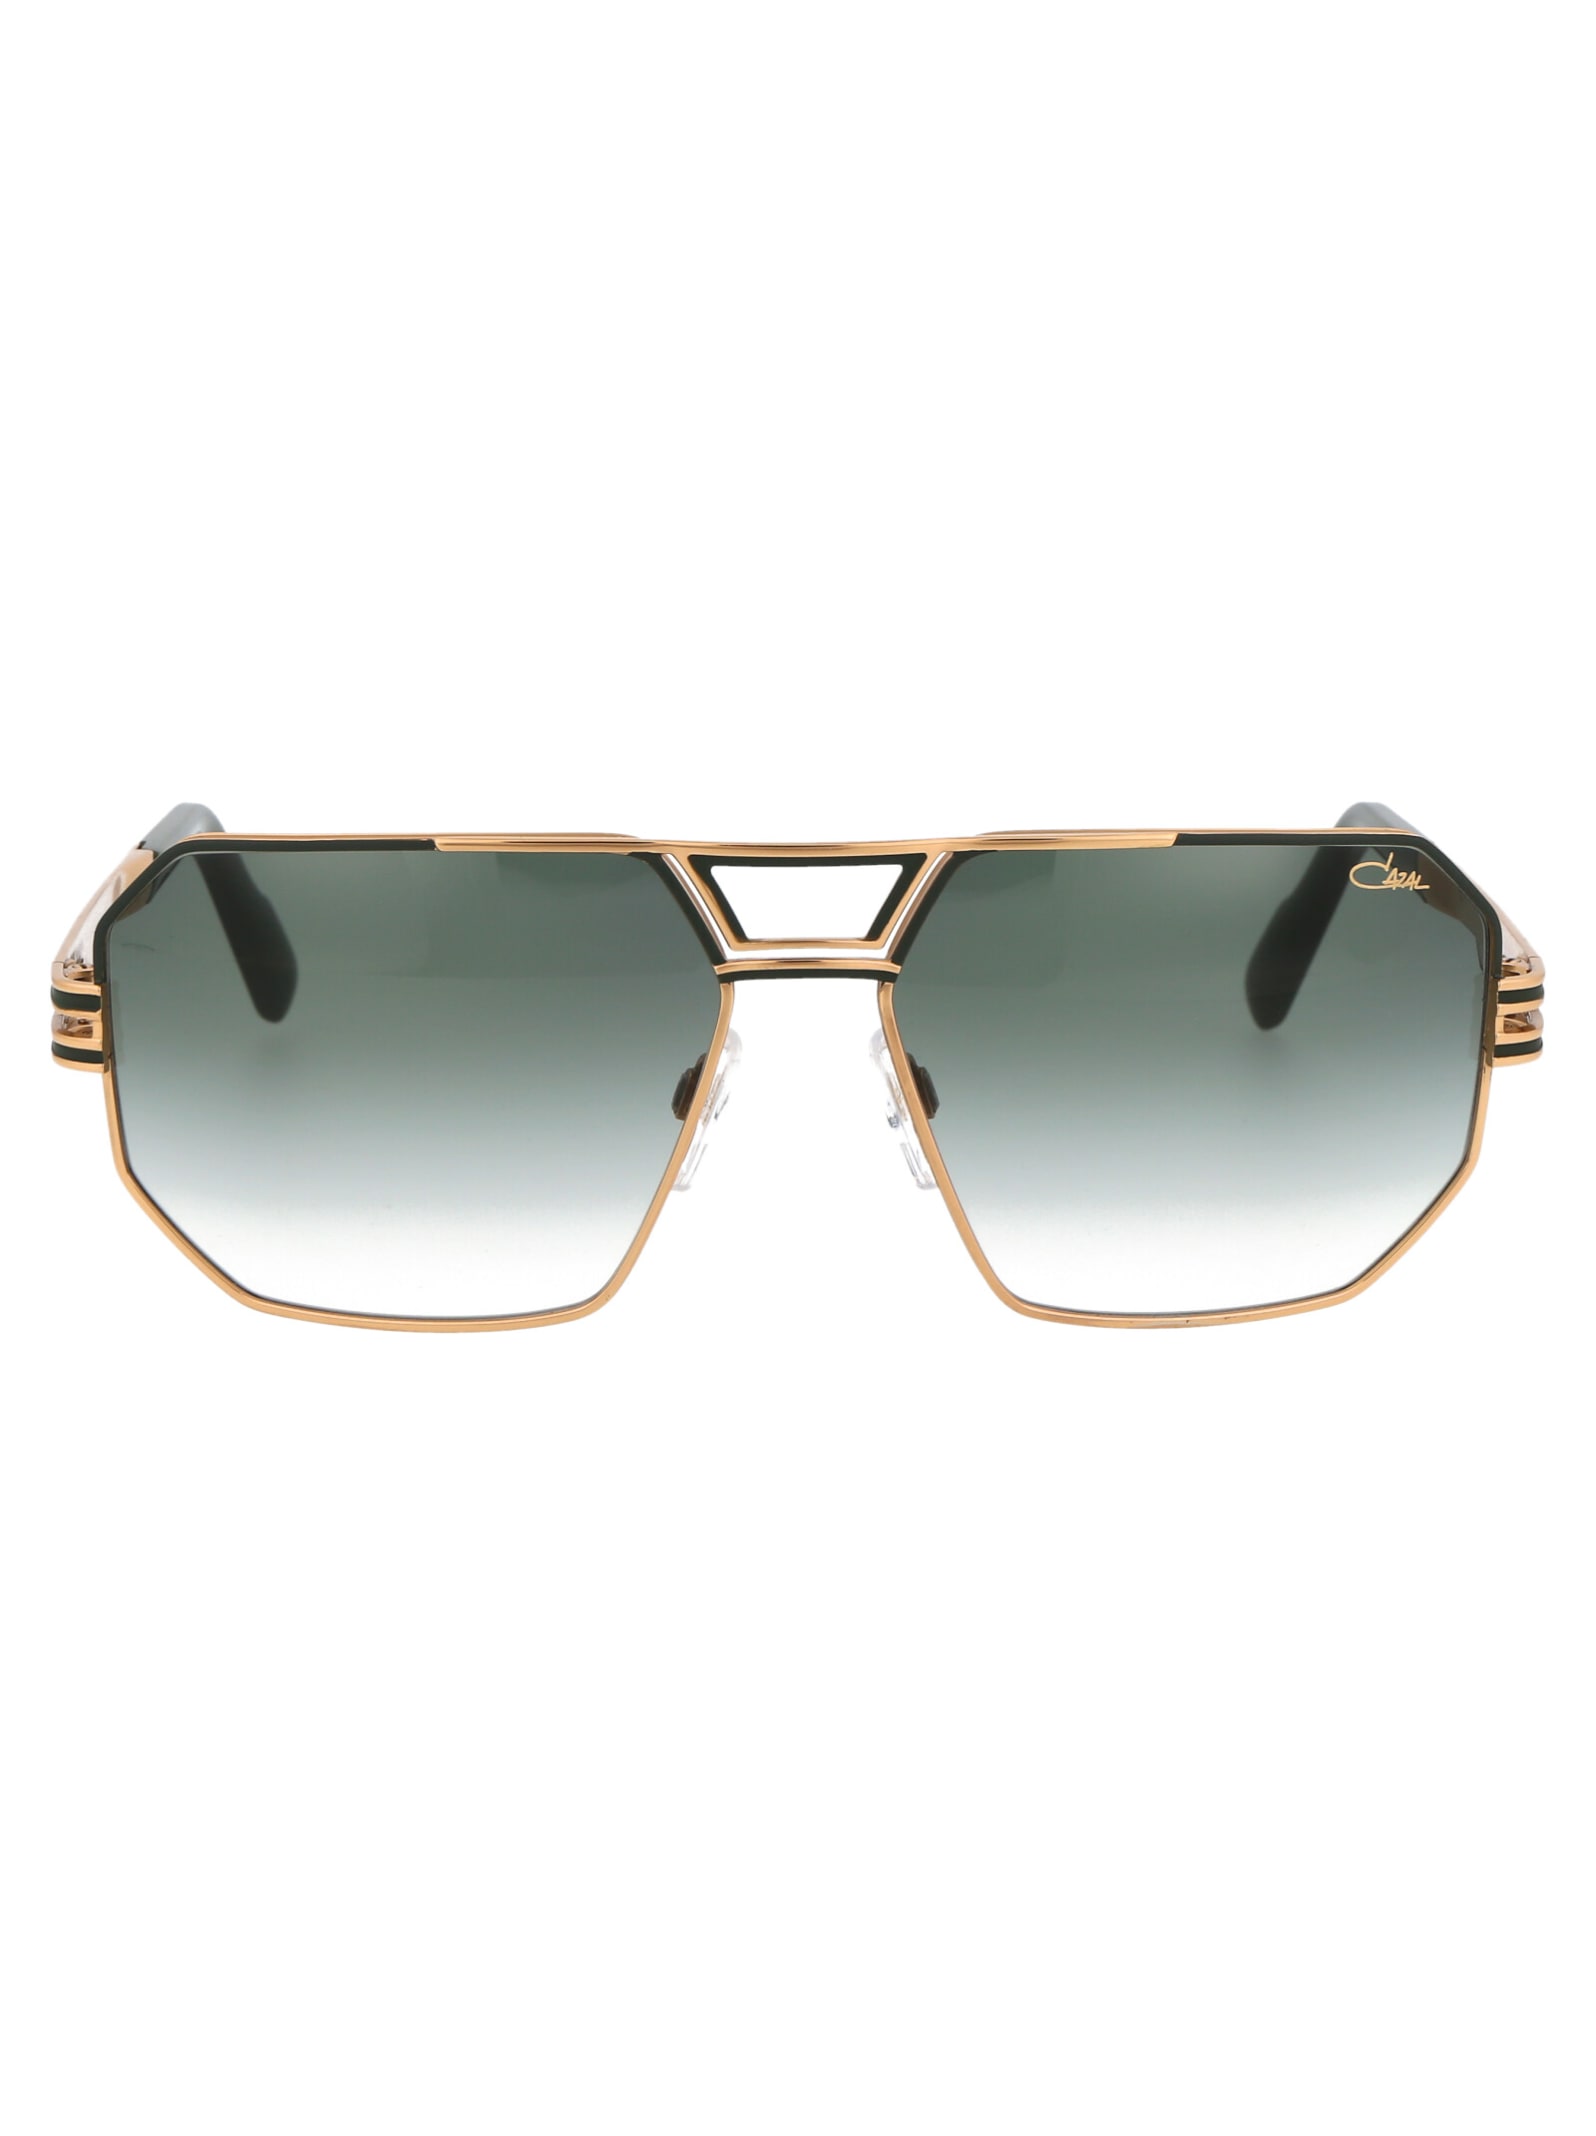 Cazal Mod. 9105 Sunglasses